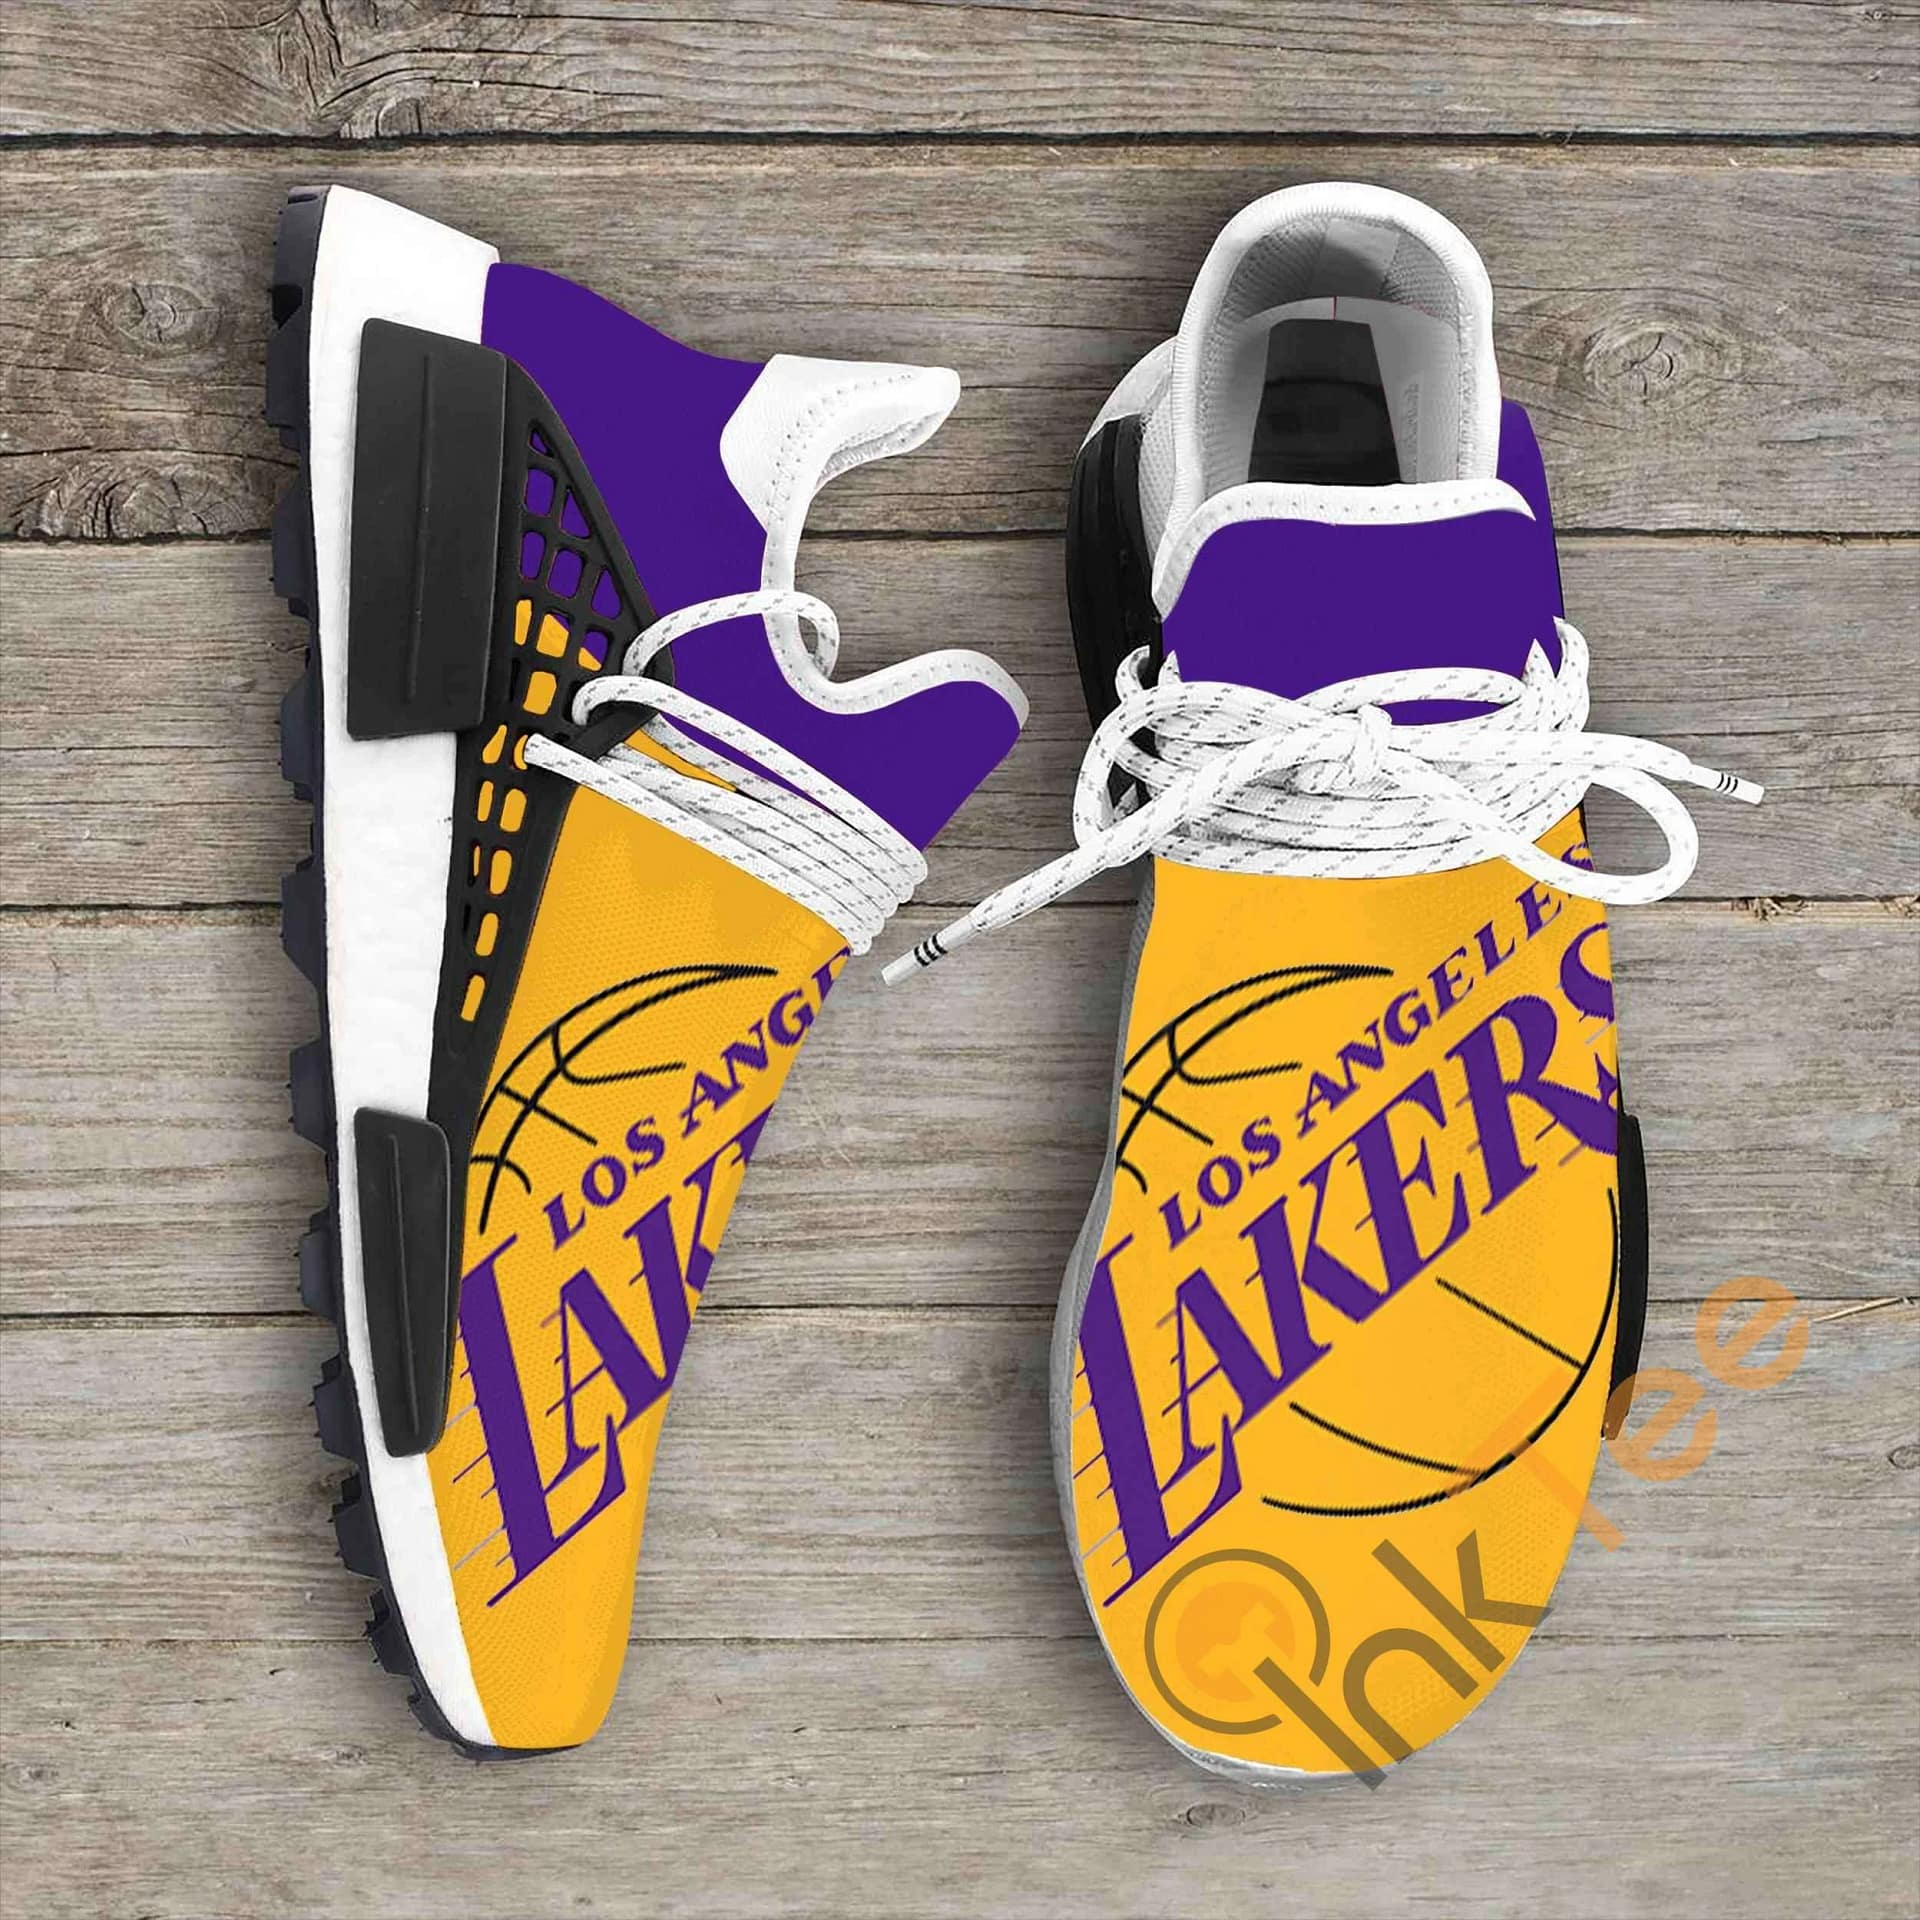 Los Angeles Lakers Nba Nmd Human Shoes